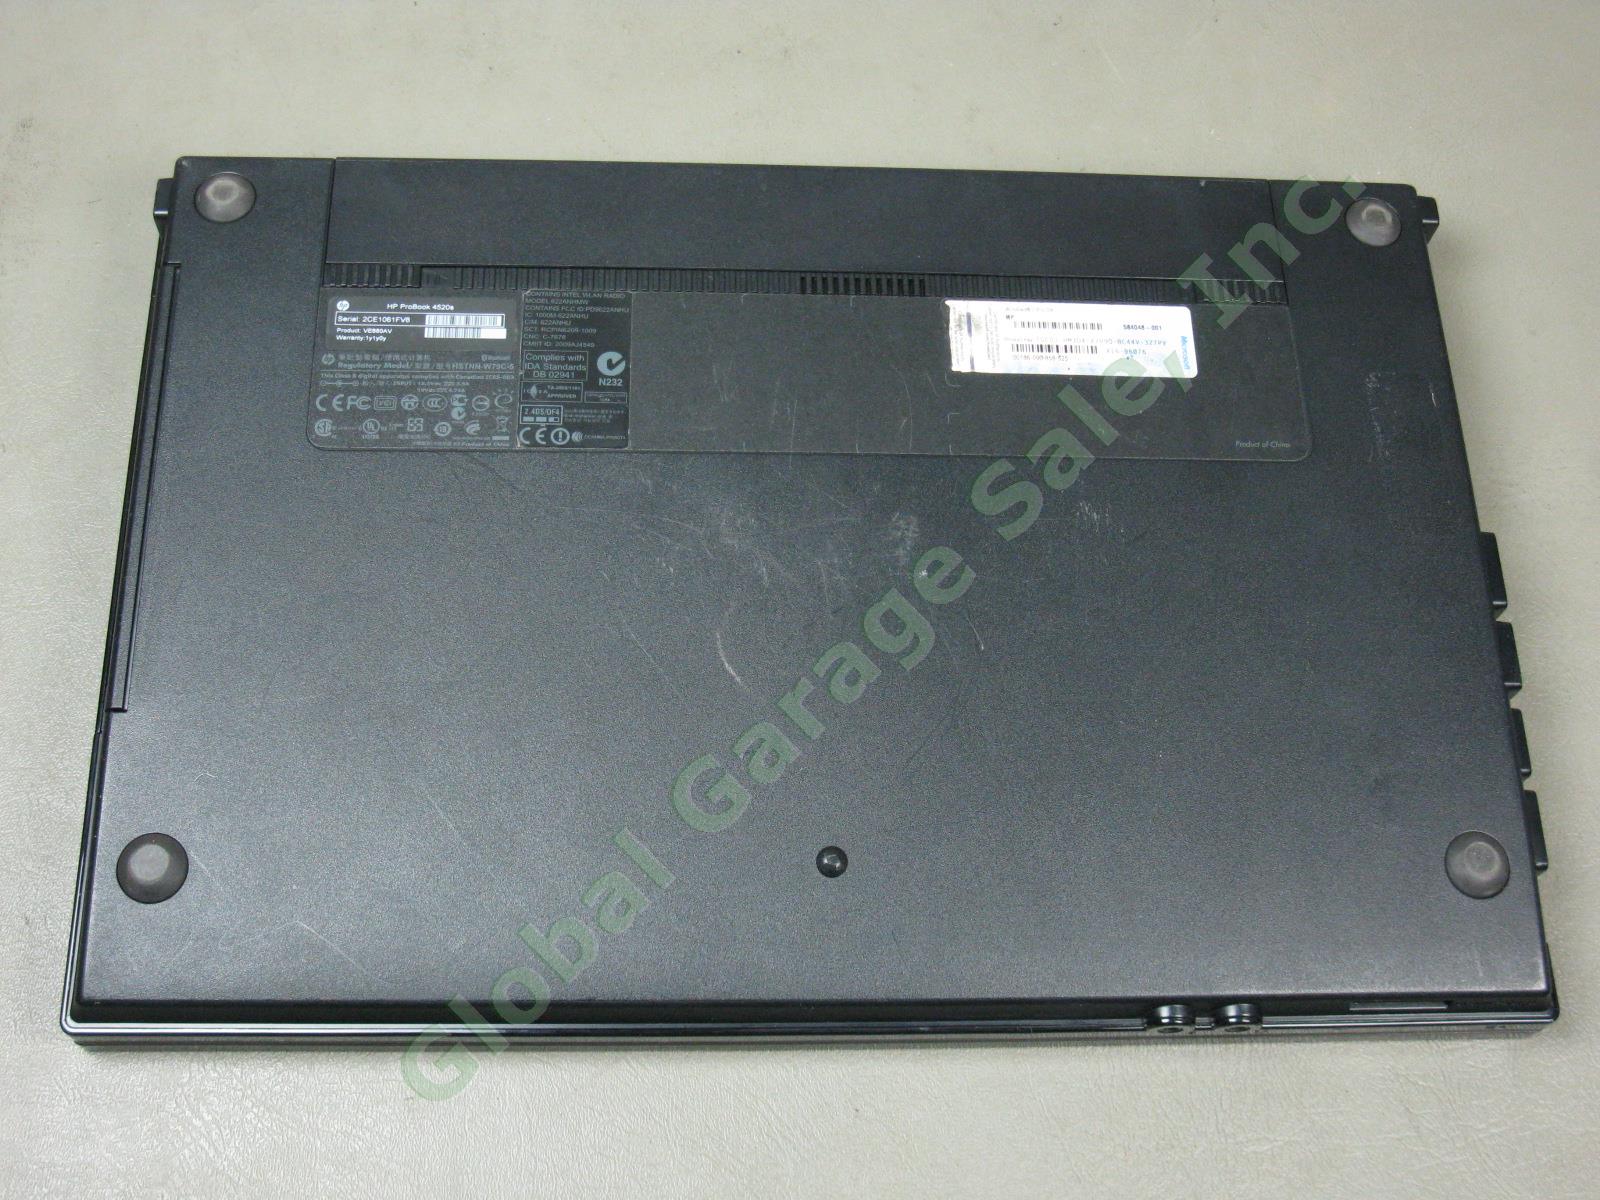 HP 4520s ProBook Laptop Computer Intel Core i5 M560 2.67GHz 2GB Windows 7 Pro NR 6